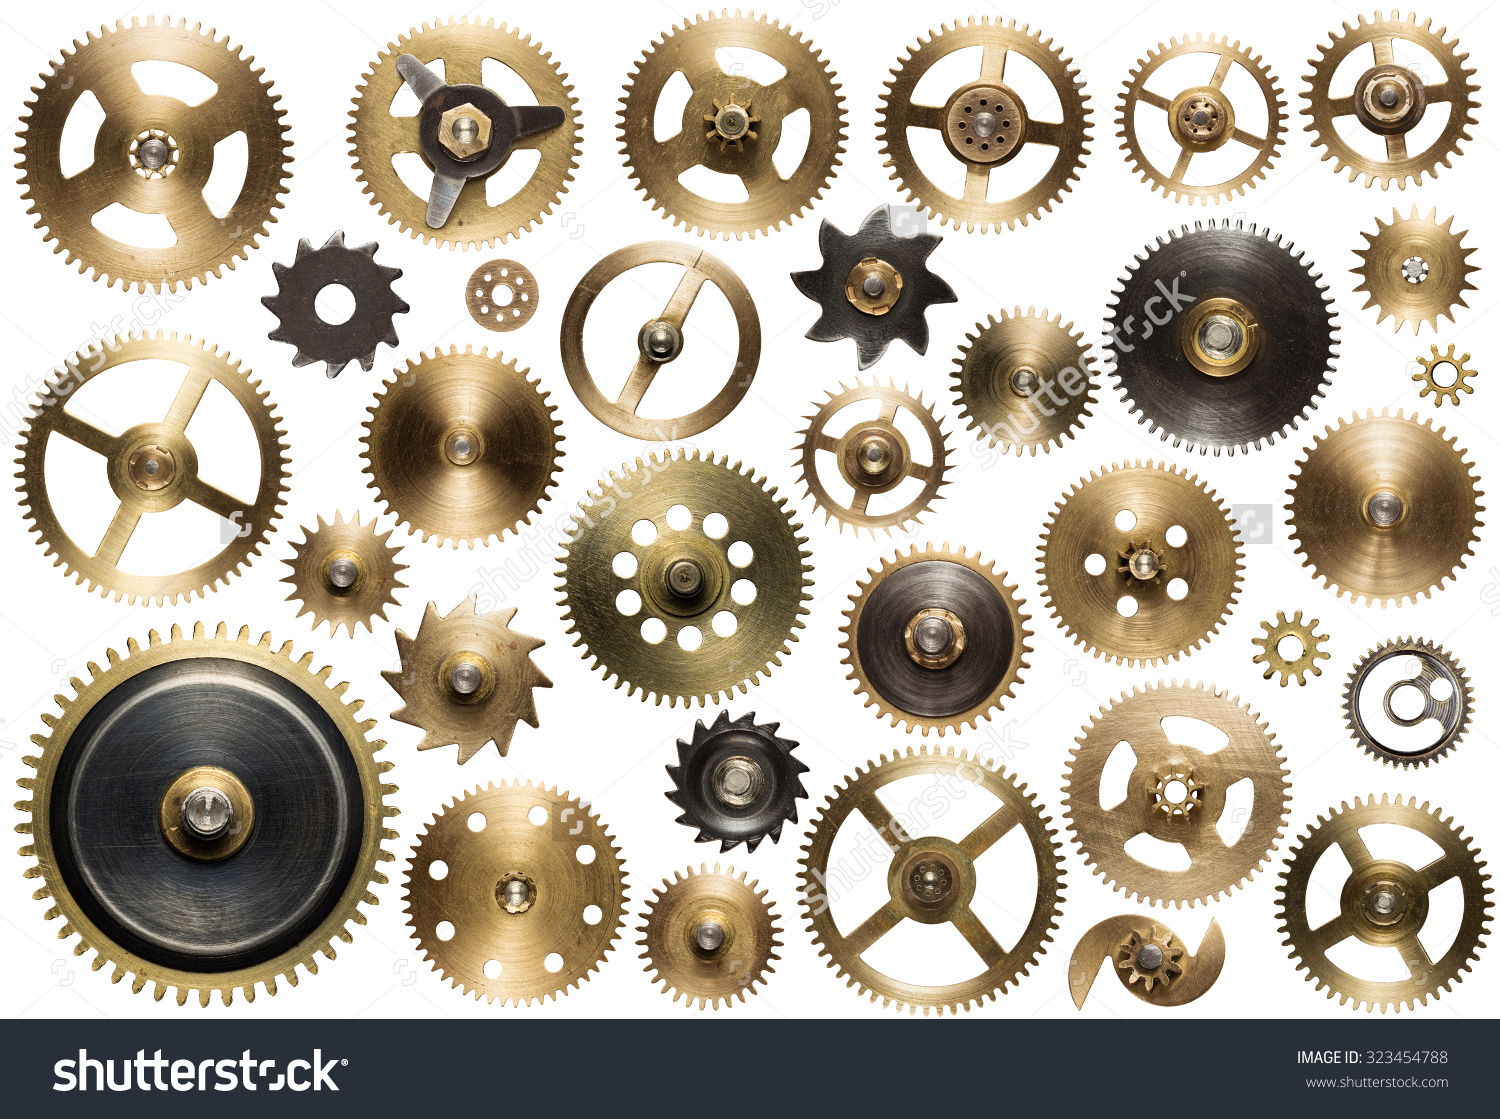 Images of Clockwork | 1500x1119